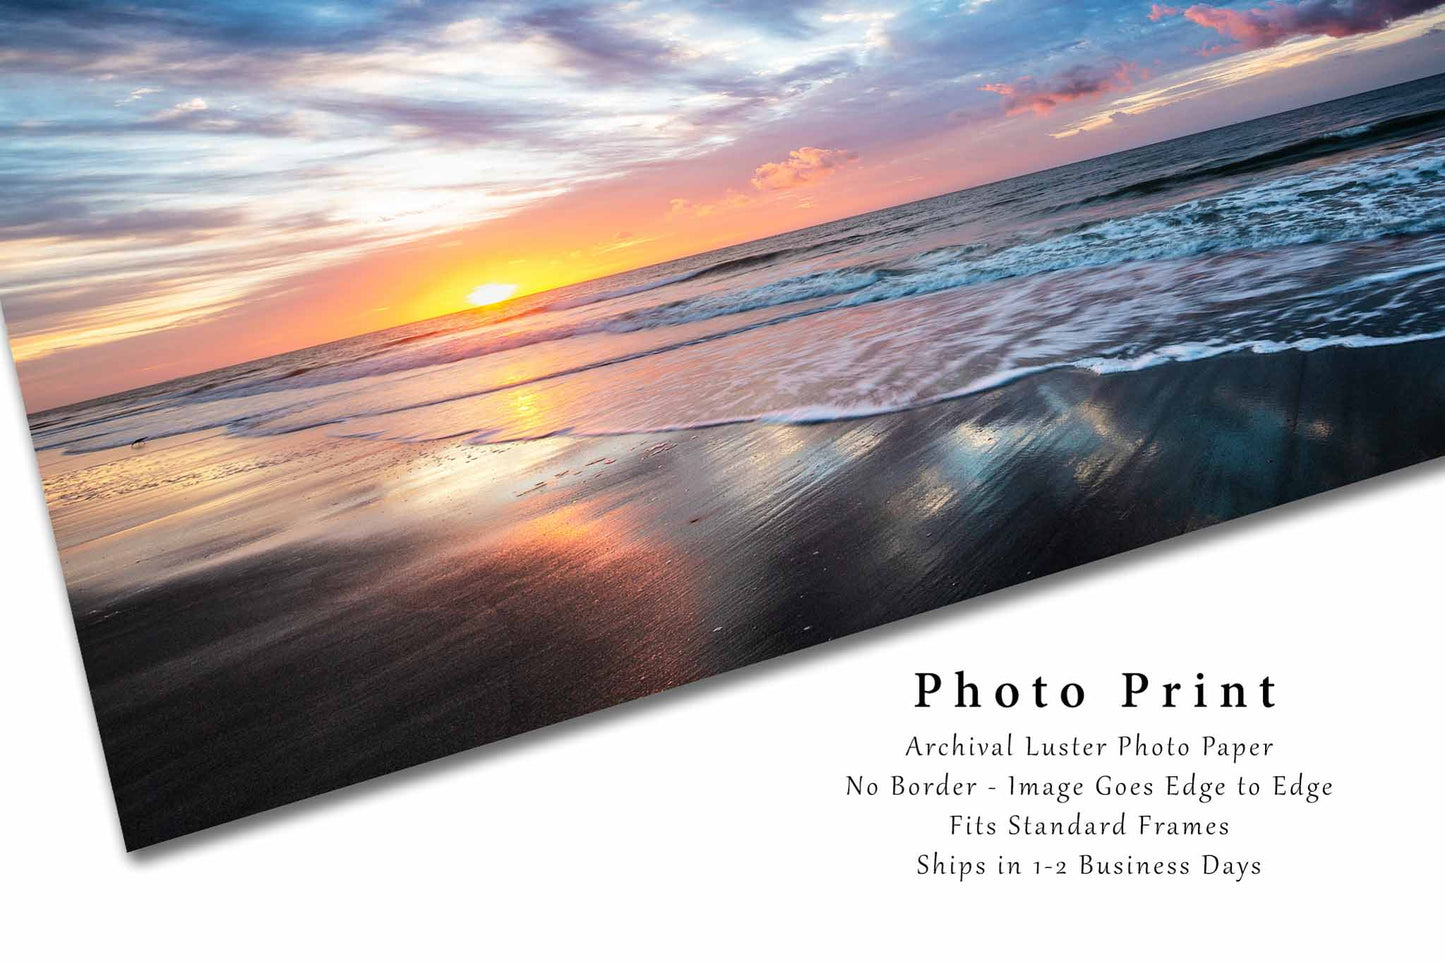 Coastal Photography Print (Not Framed) Picture of Scenic Sunrise Over Beach at Hilton Head Island South Carolina Ocean Wall Art Beach House Decor